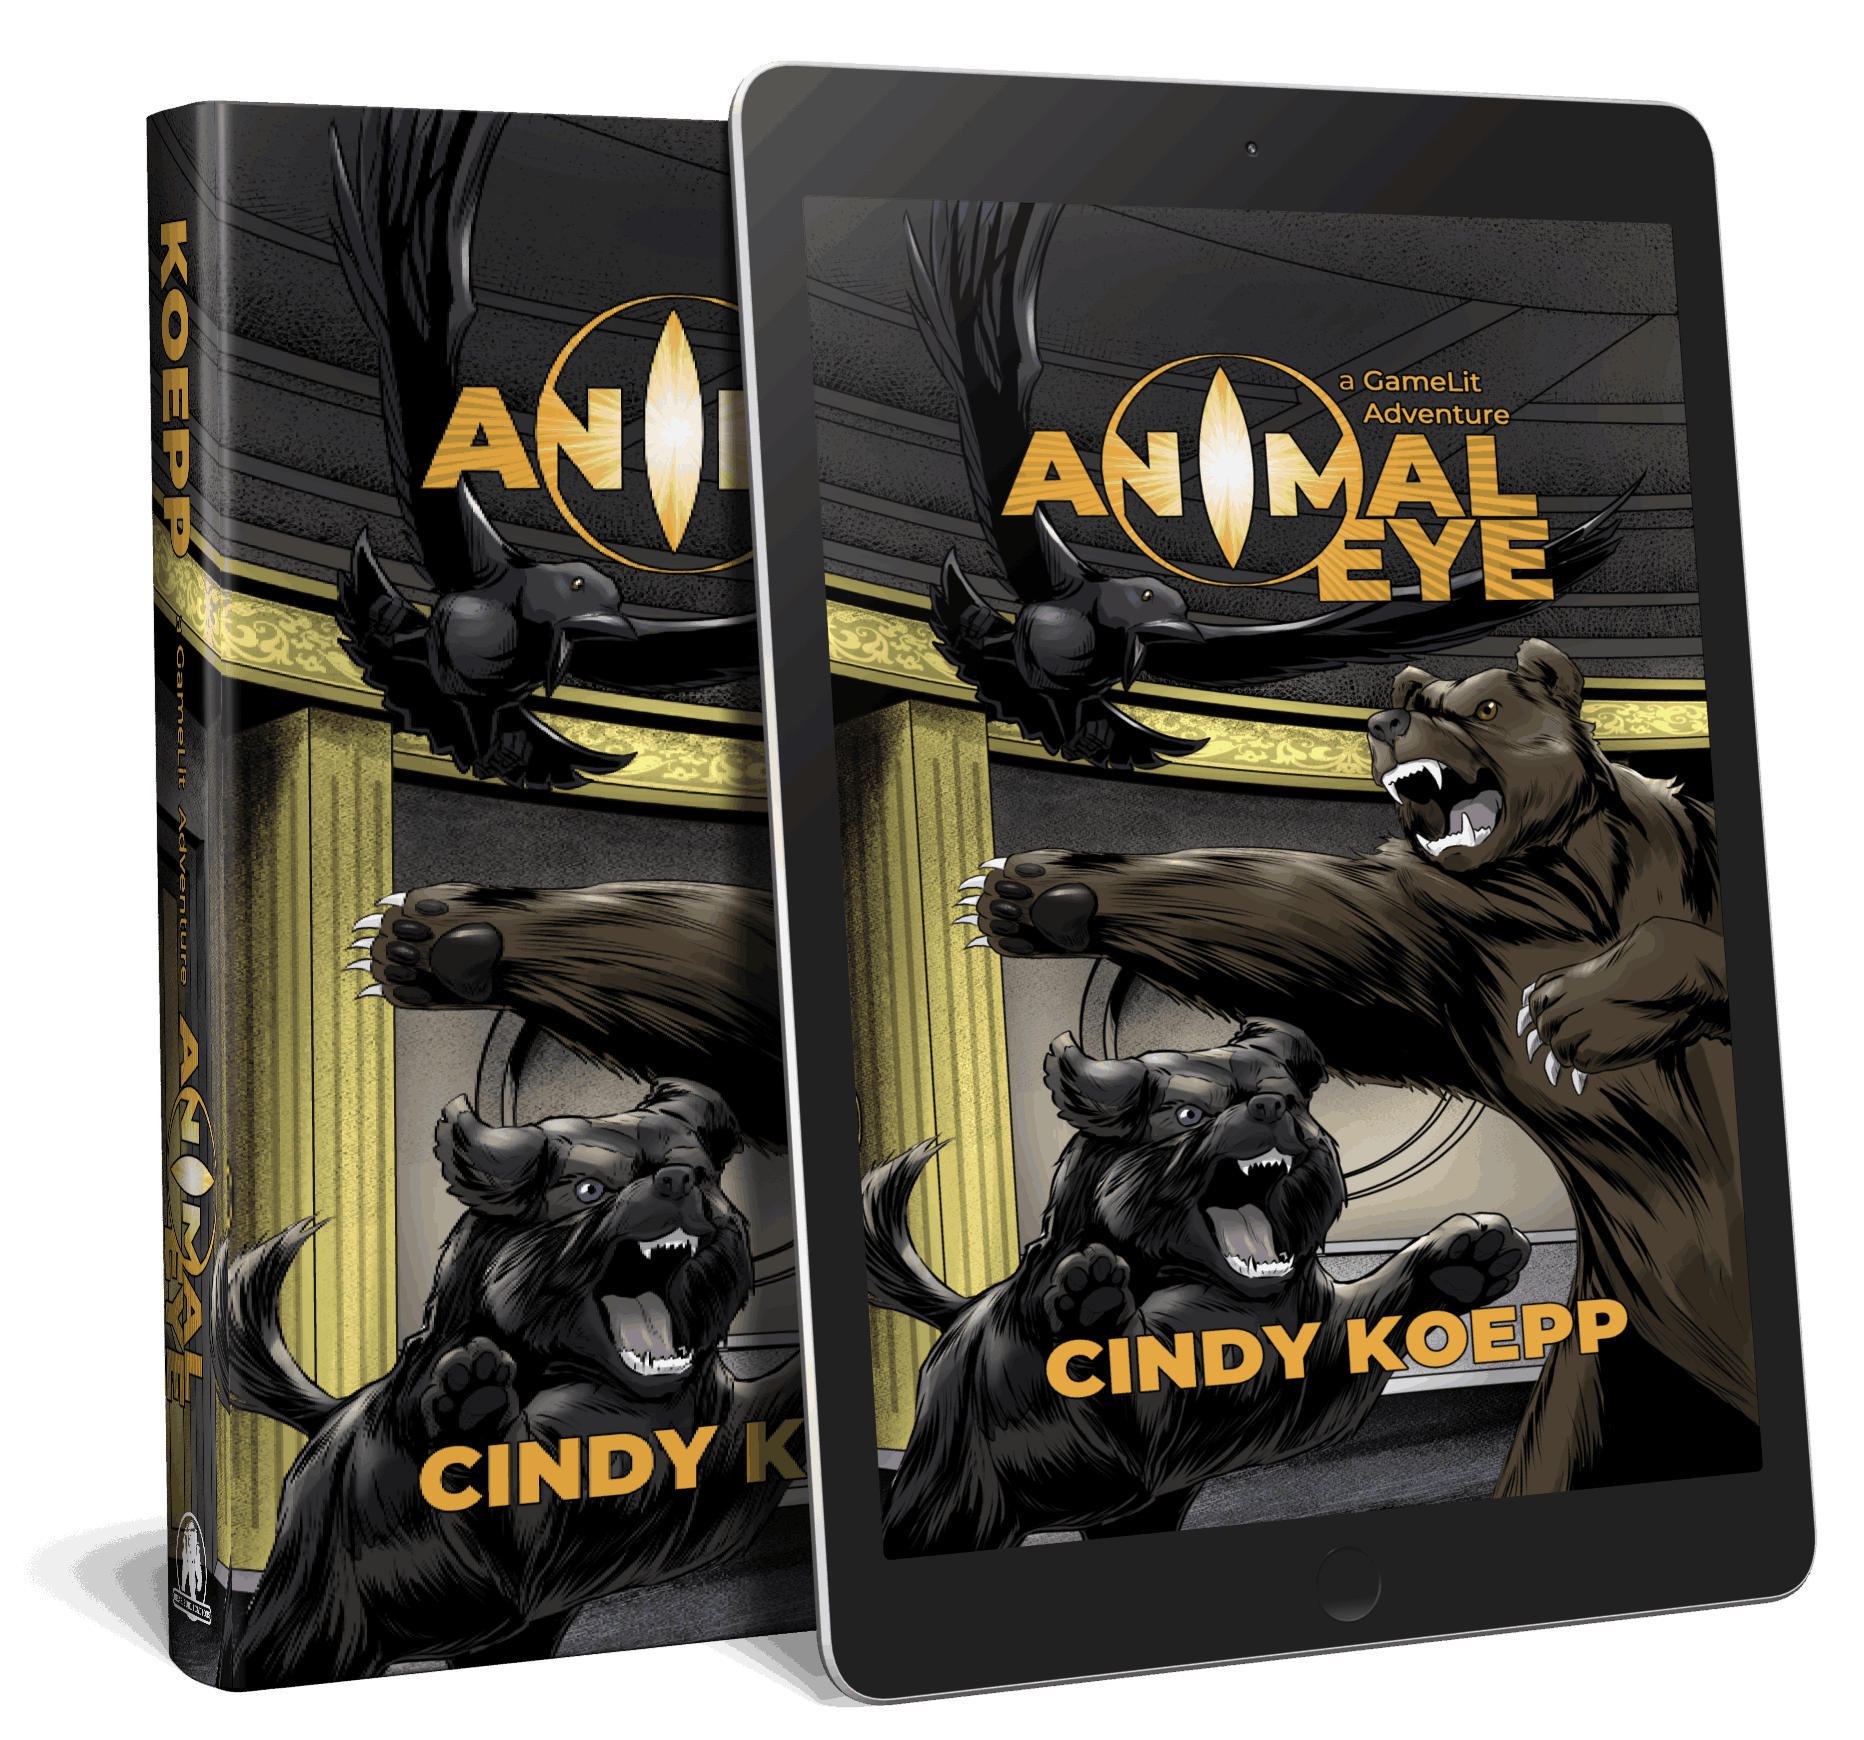 Animal Eye by Cindy Koepp